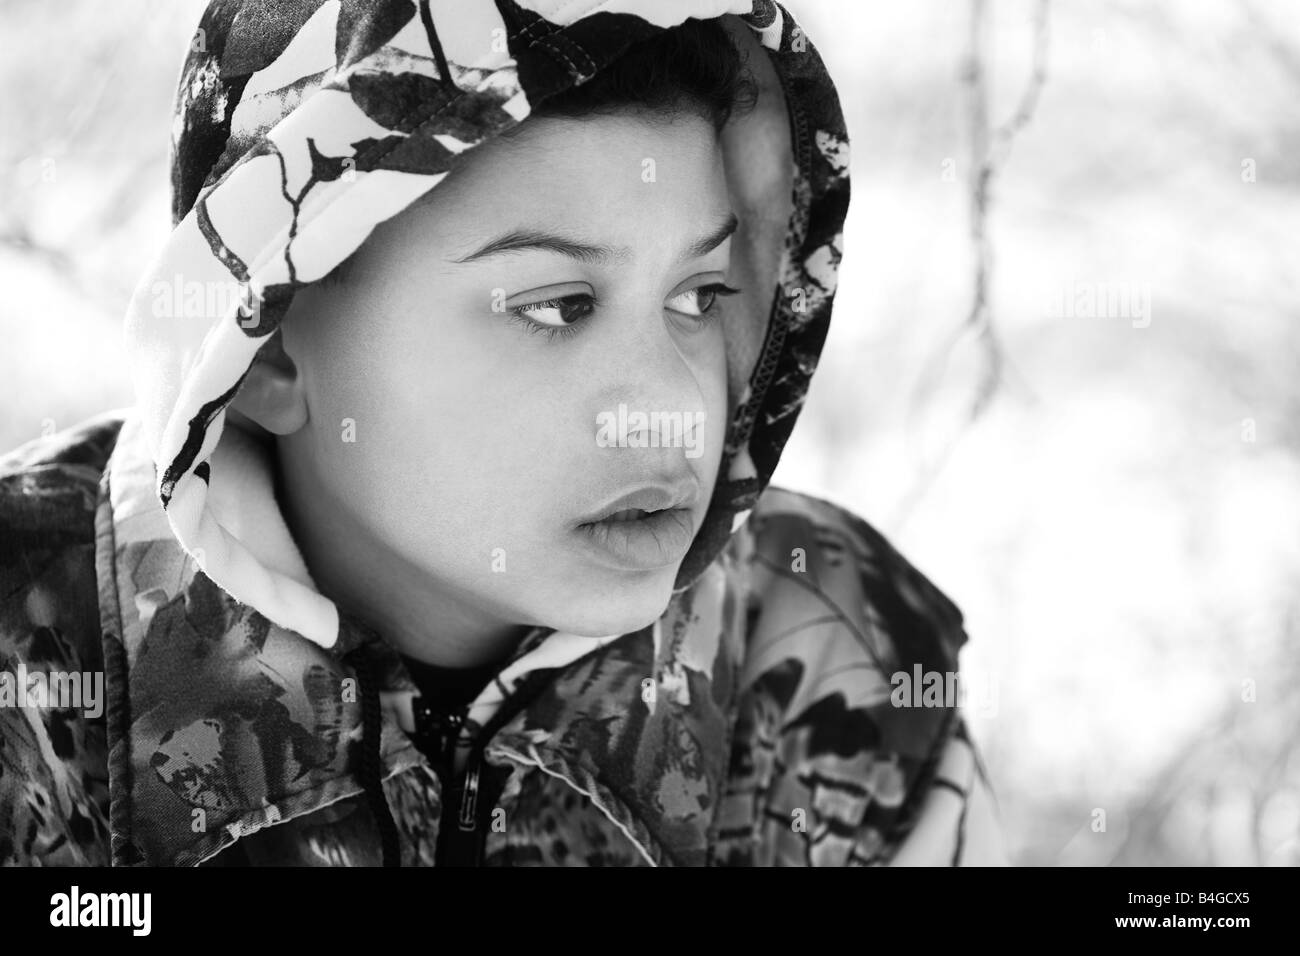 Teenage Boy In Camouflage Clothing Stock Photo